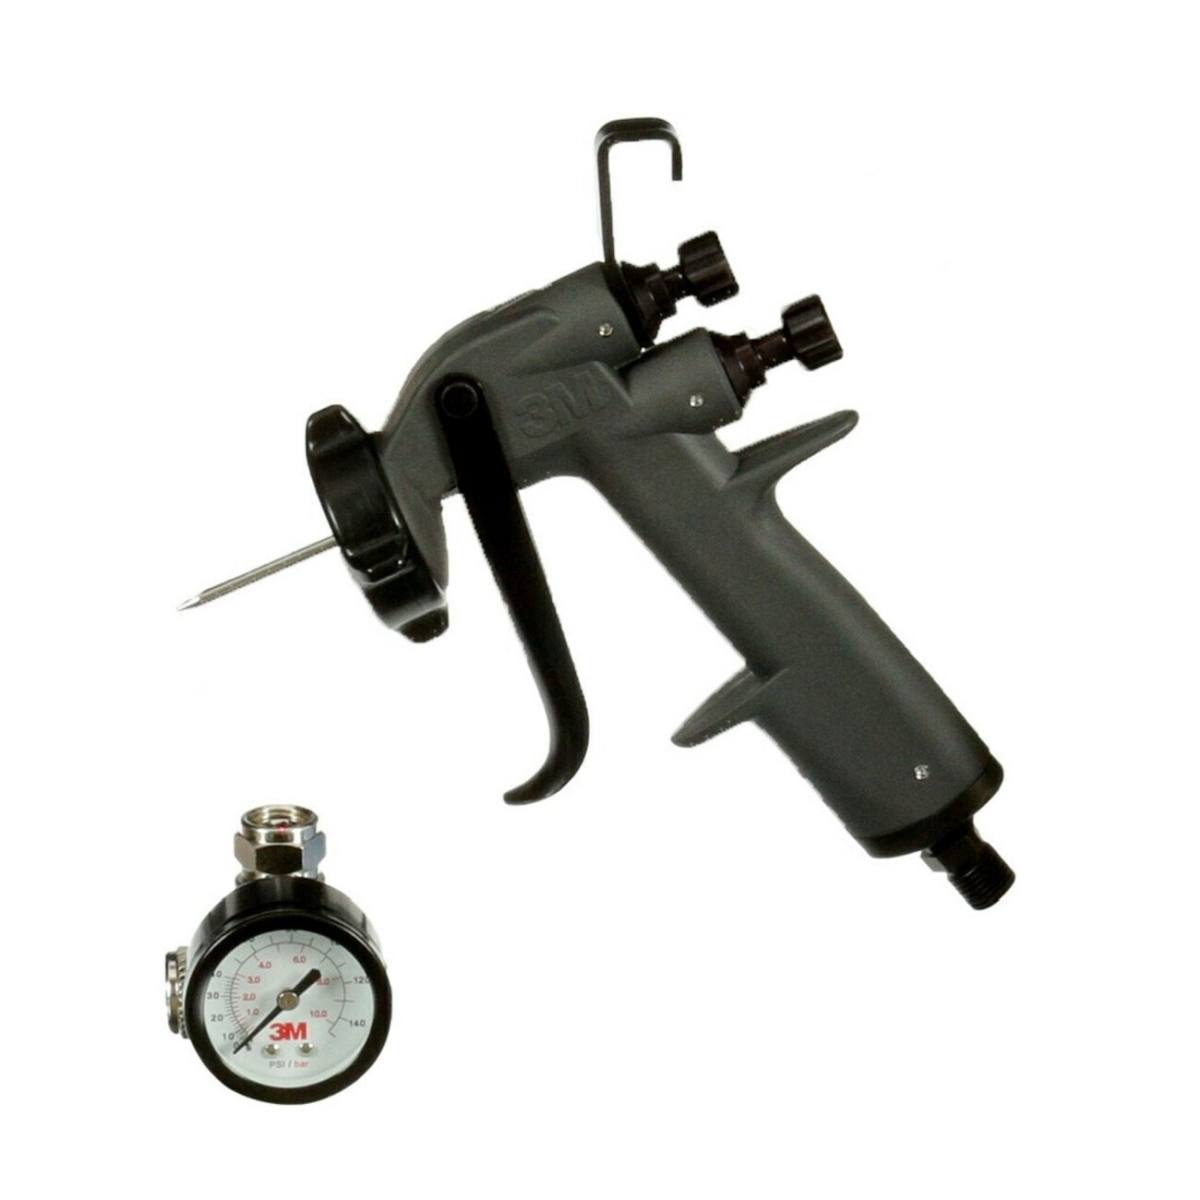 3M High-performance spray gun, spray gun and valve for air flow control